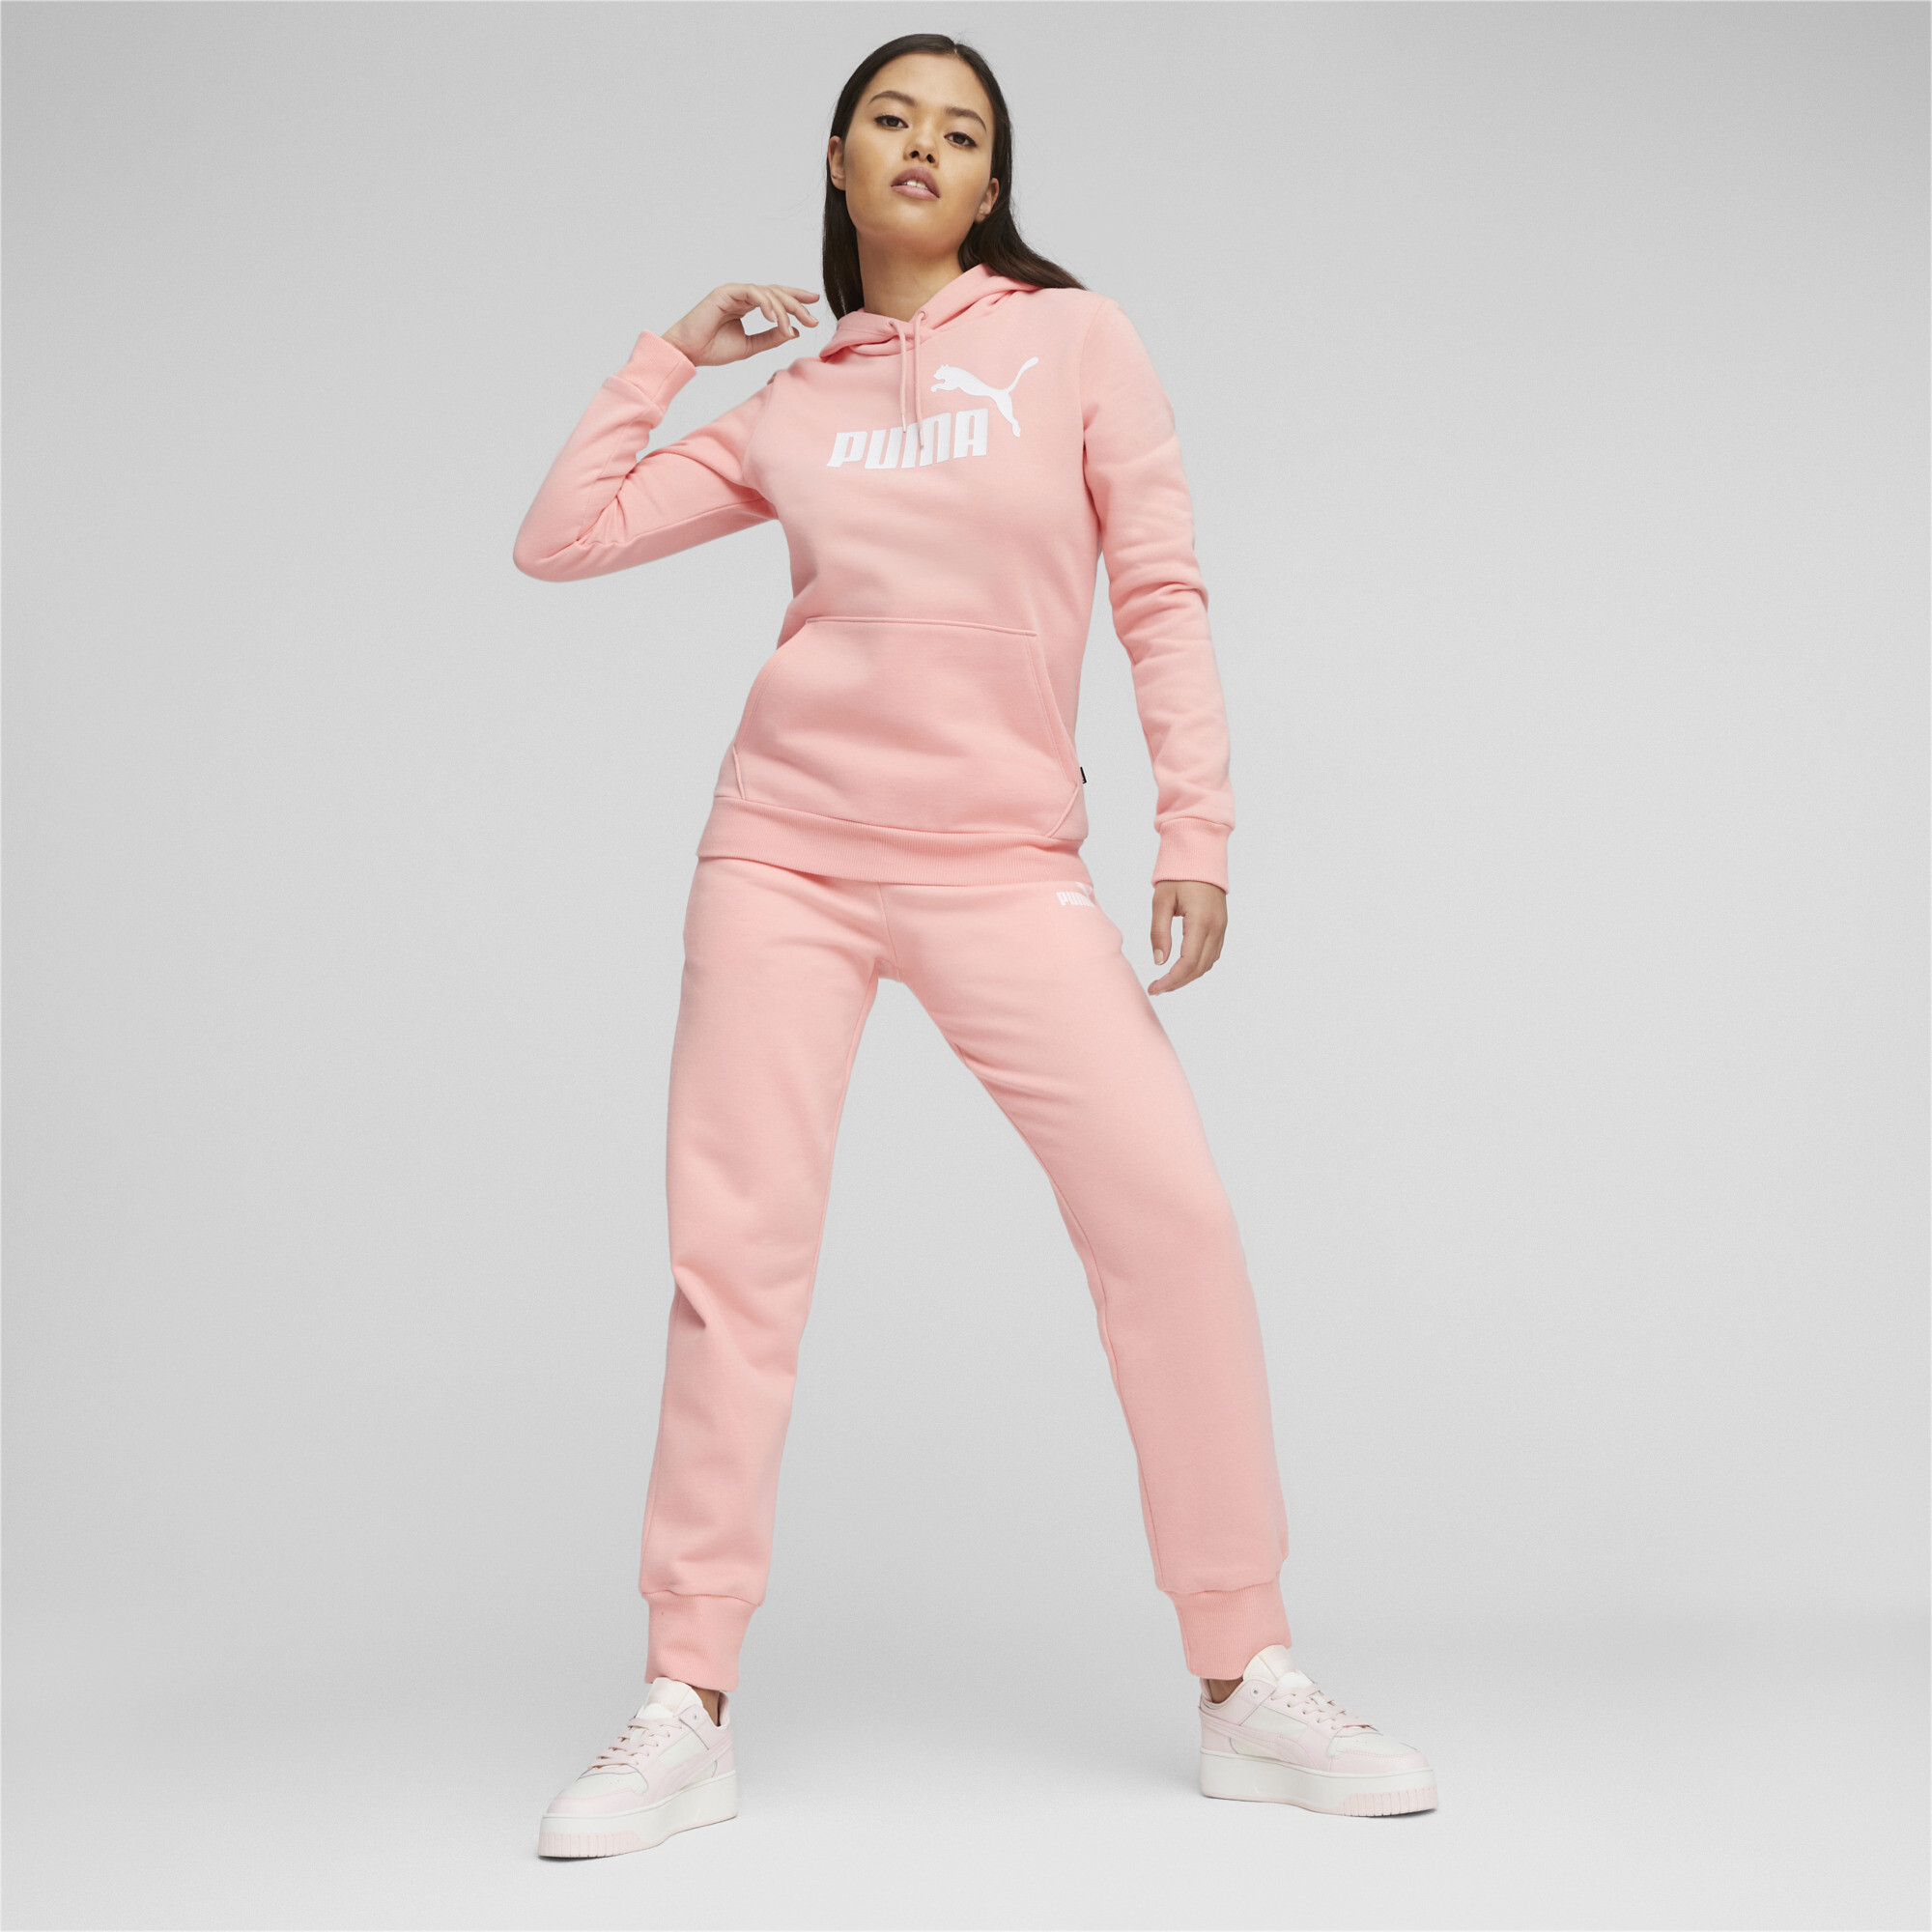 Women's Puma Essentials Logo FL's Hoodie, Pink, Size XL, Clothing